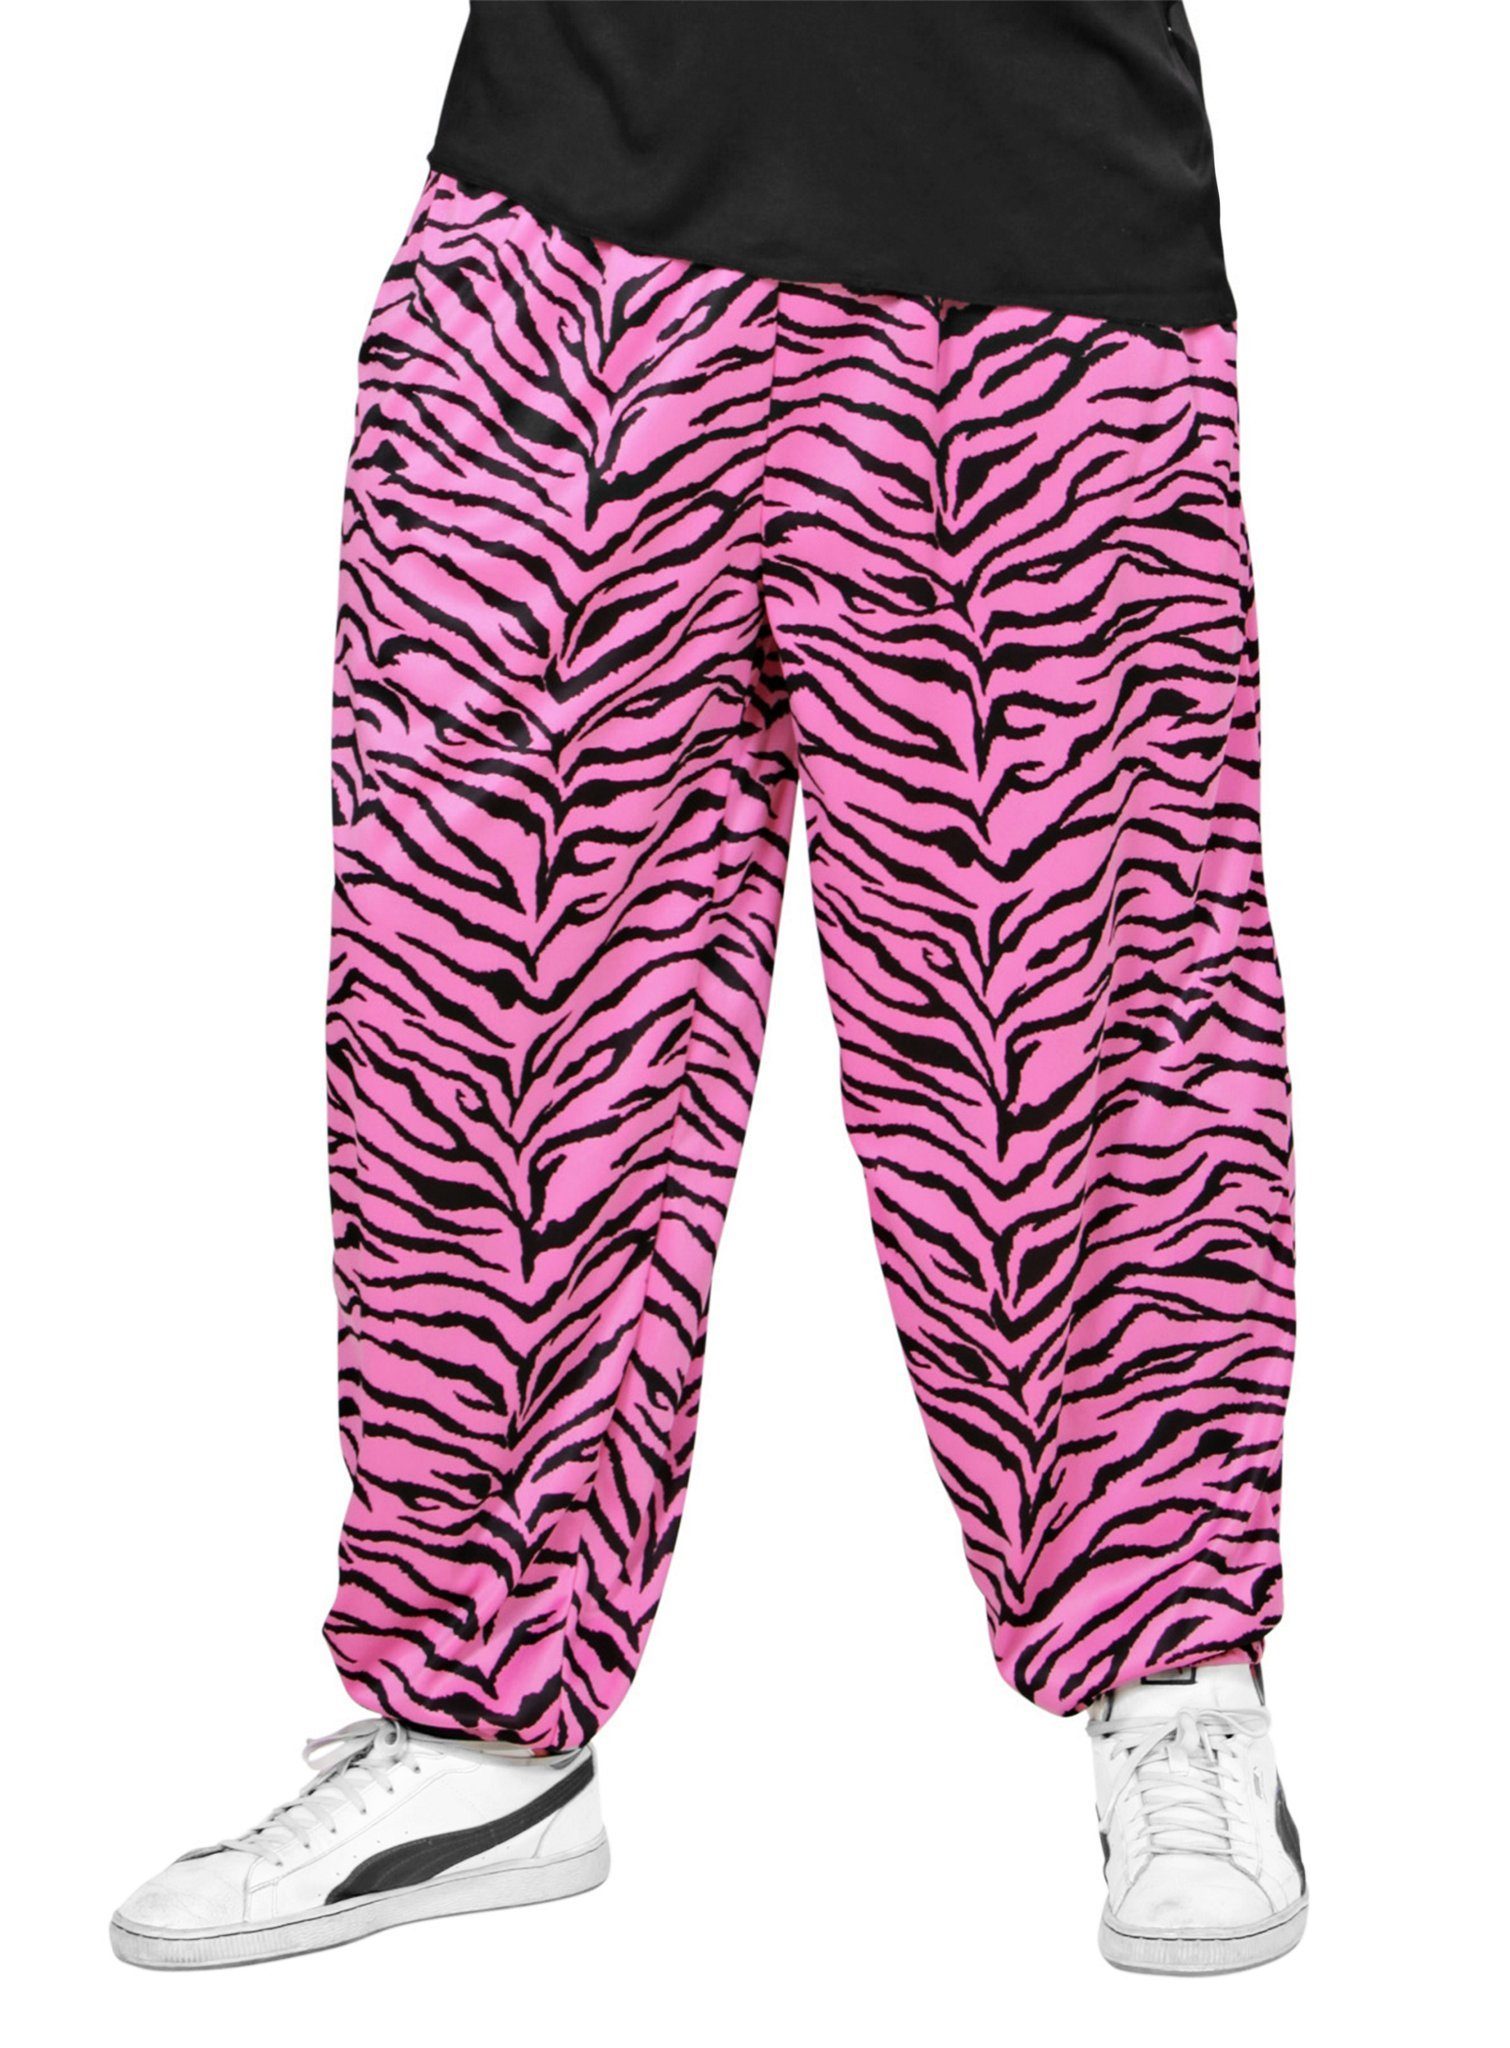 Widdmann Kostüm 80er Jogginghose Pink Tiger, Oldschool-Proll-Look für New Kids